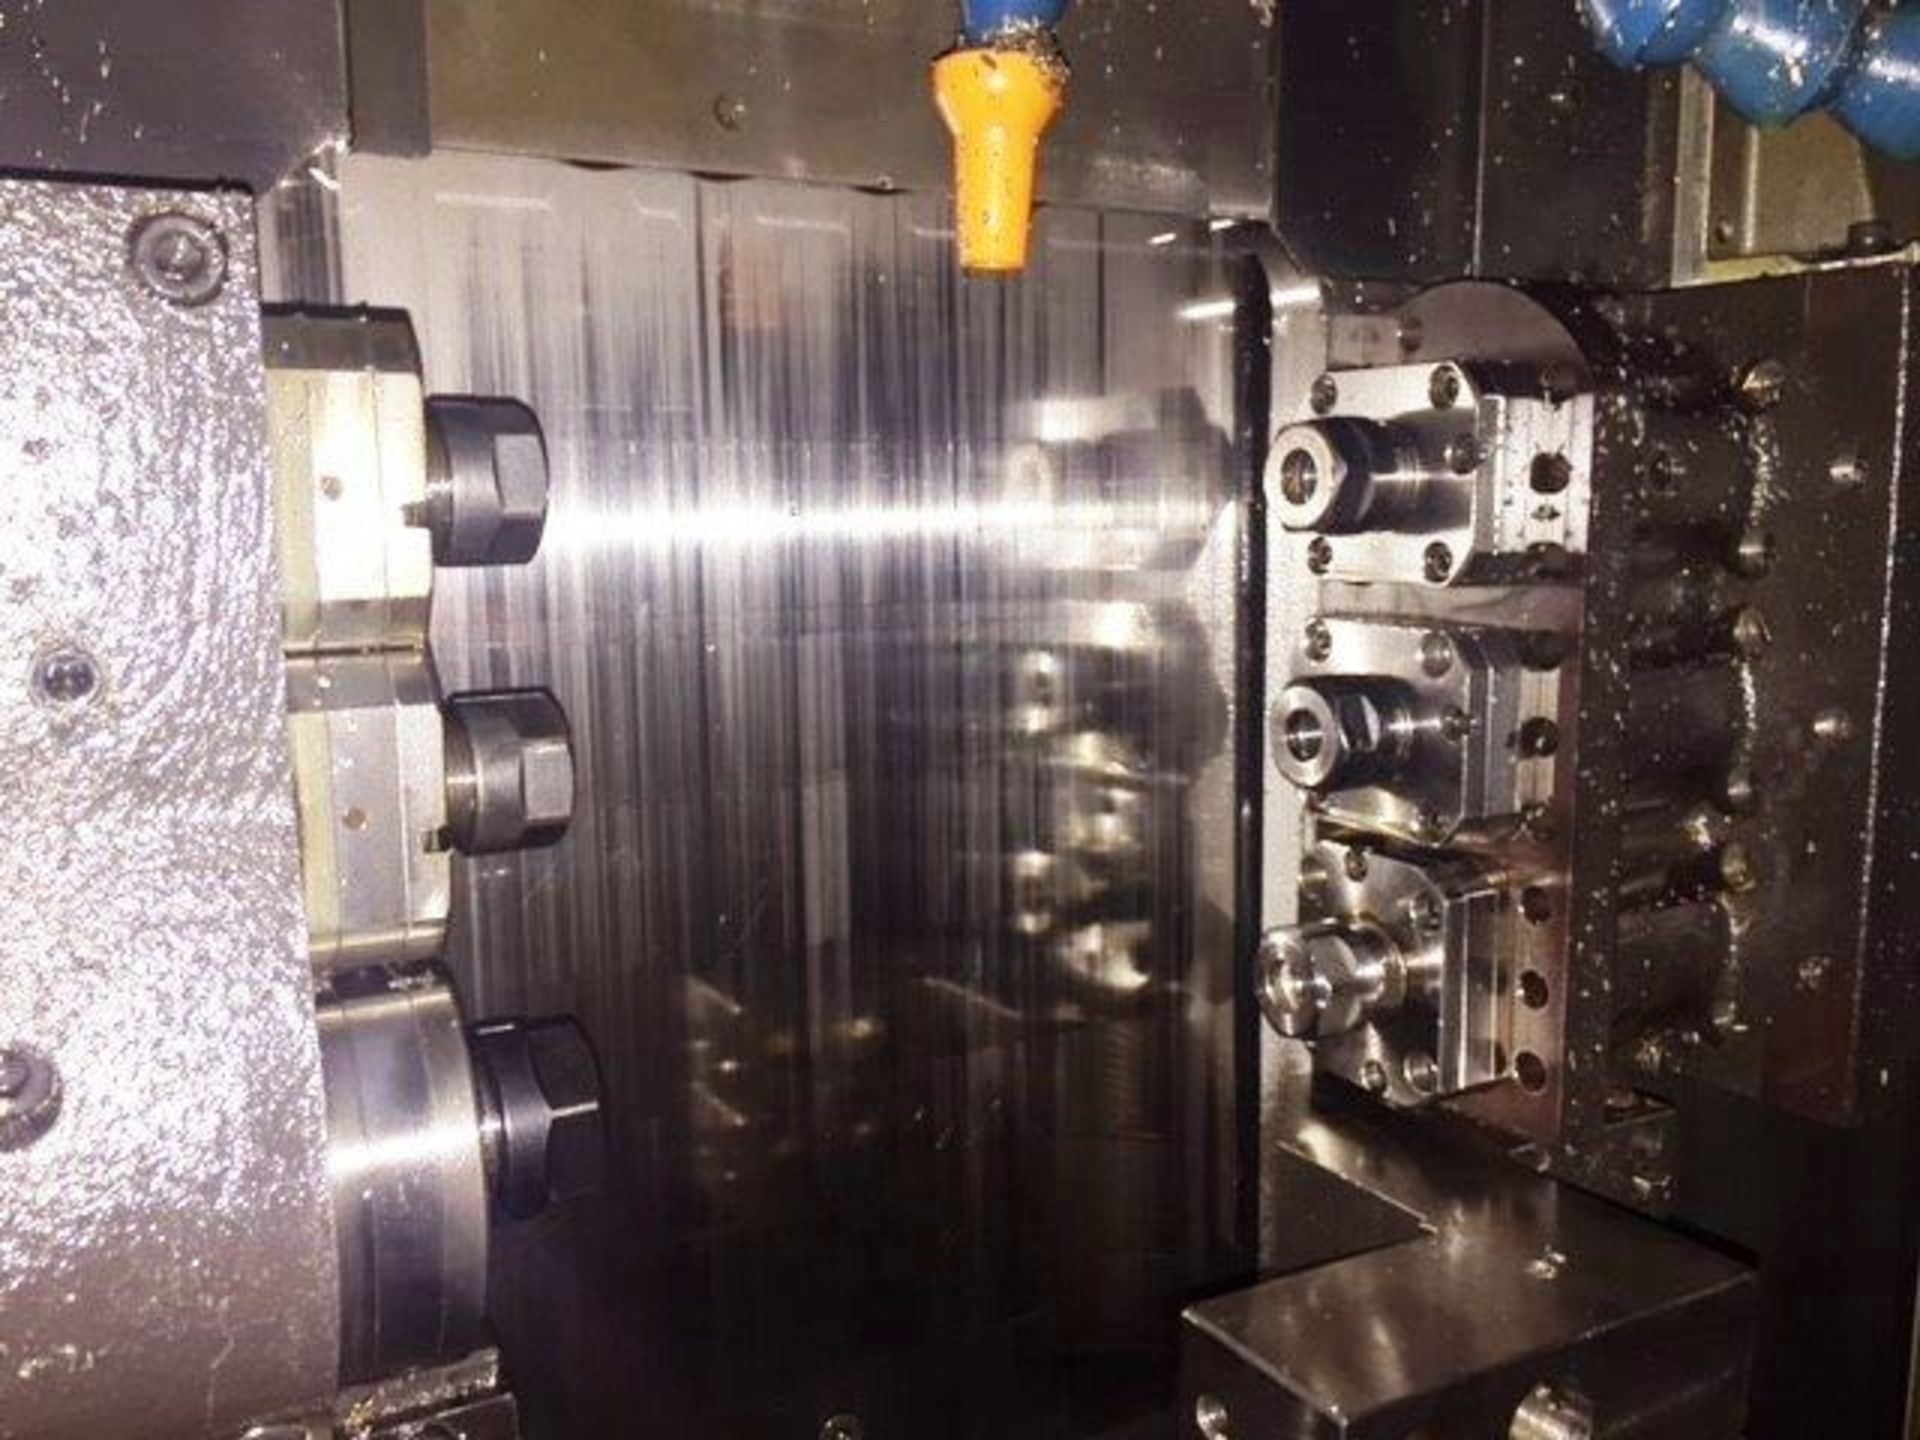 32MM TSUGAMI SS32 SUPER SWISSTURN SLIDING HEADSTOCK CNC AUTOMATIC LATHE, S/N 183, NEW 2010 Working - Image 6 of 15